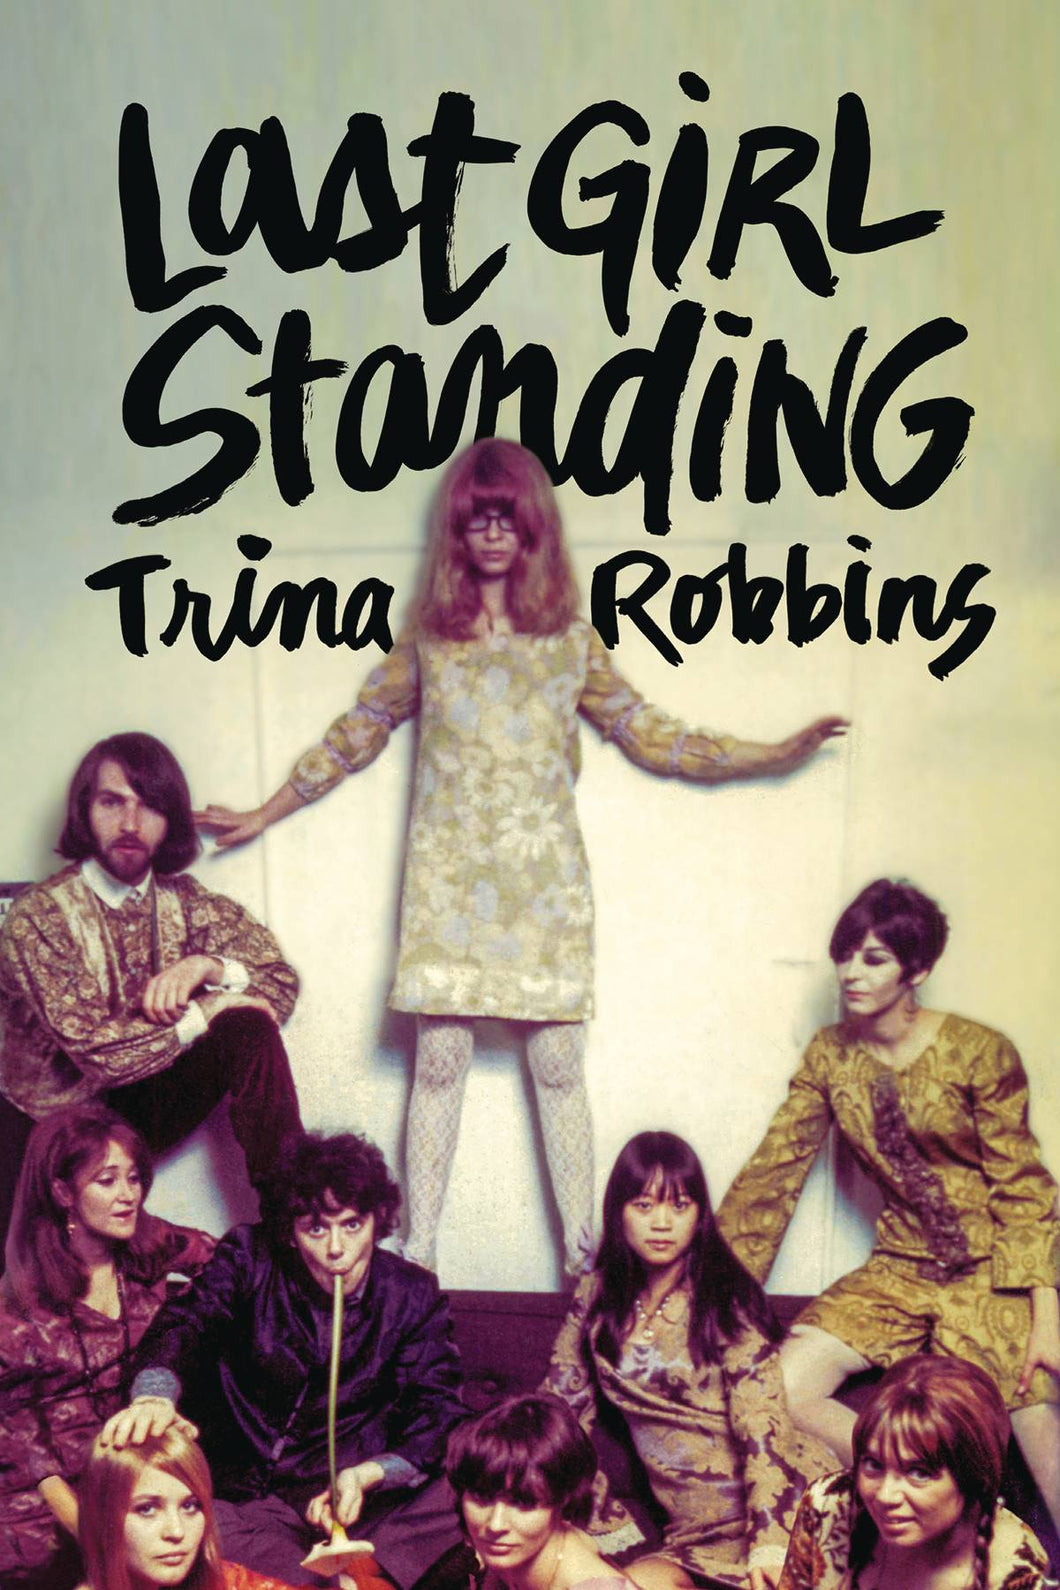 Last Girl Standing Sc Trina Robbins